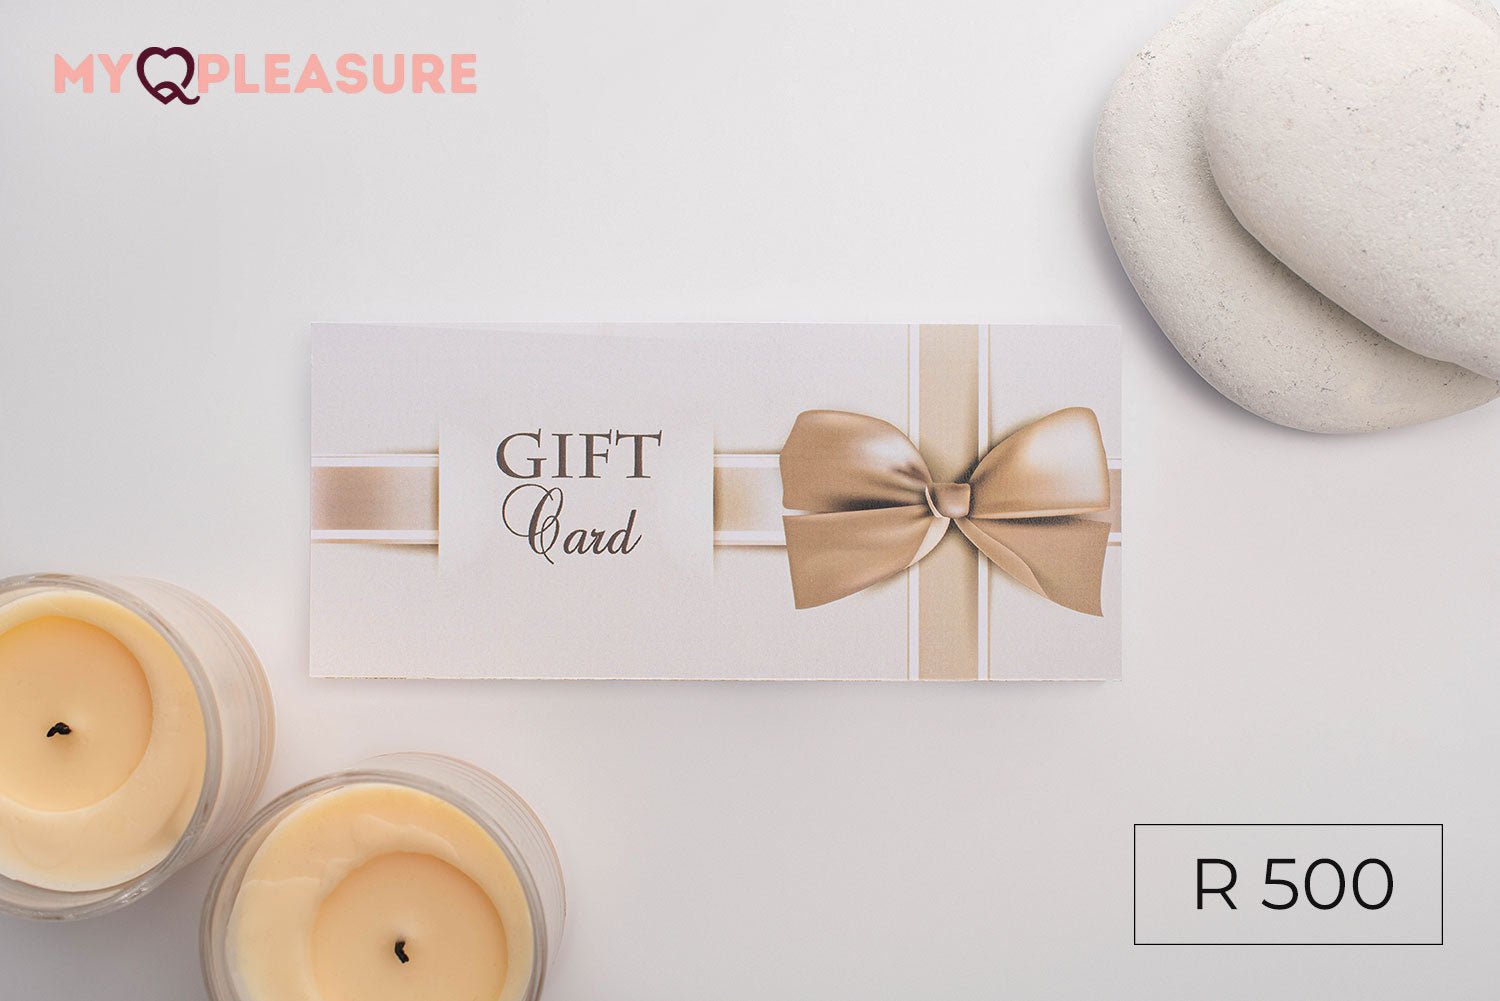 My Pleasure Gift Card - Shopping & Things